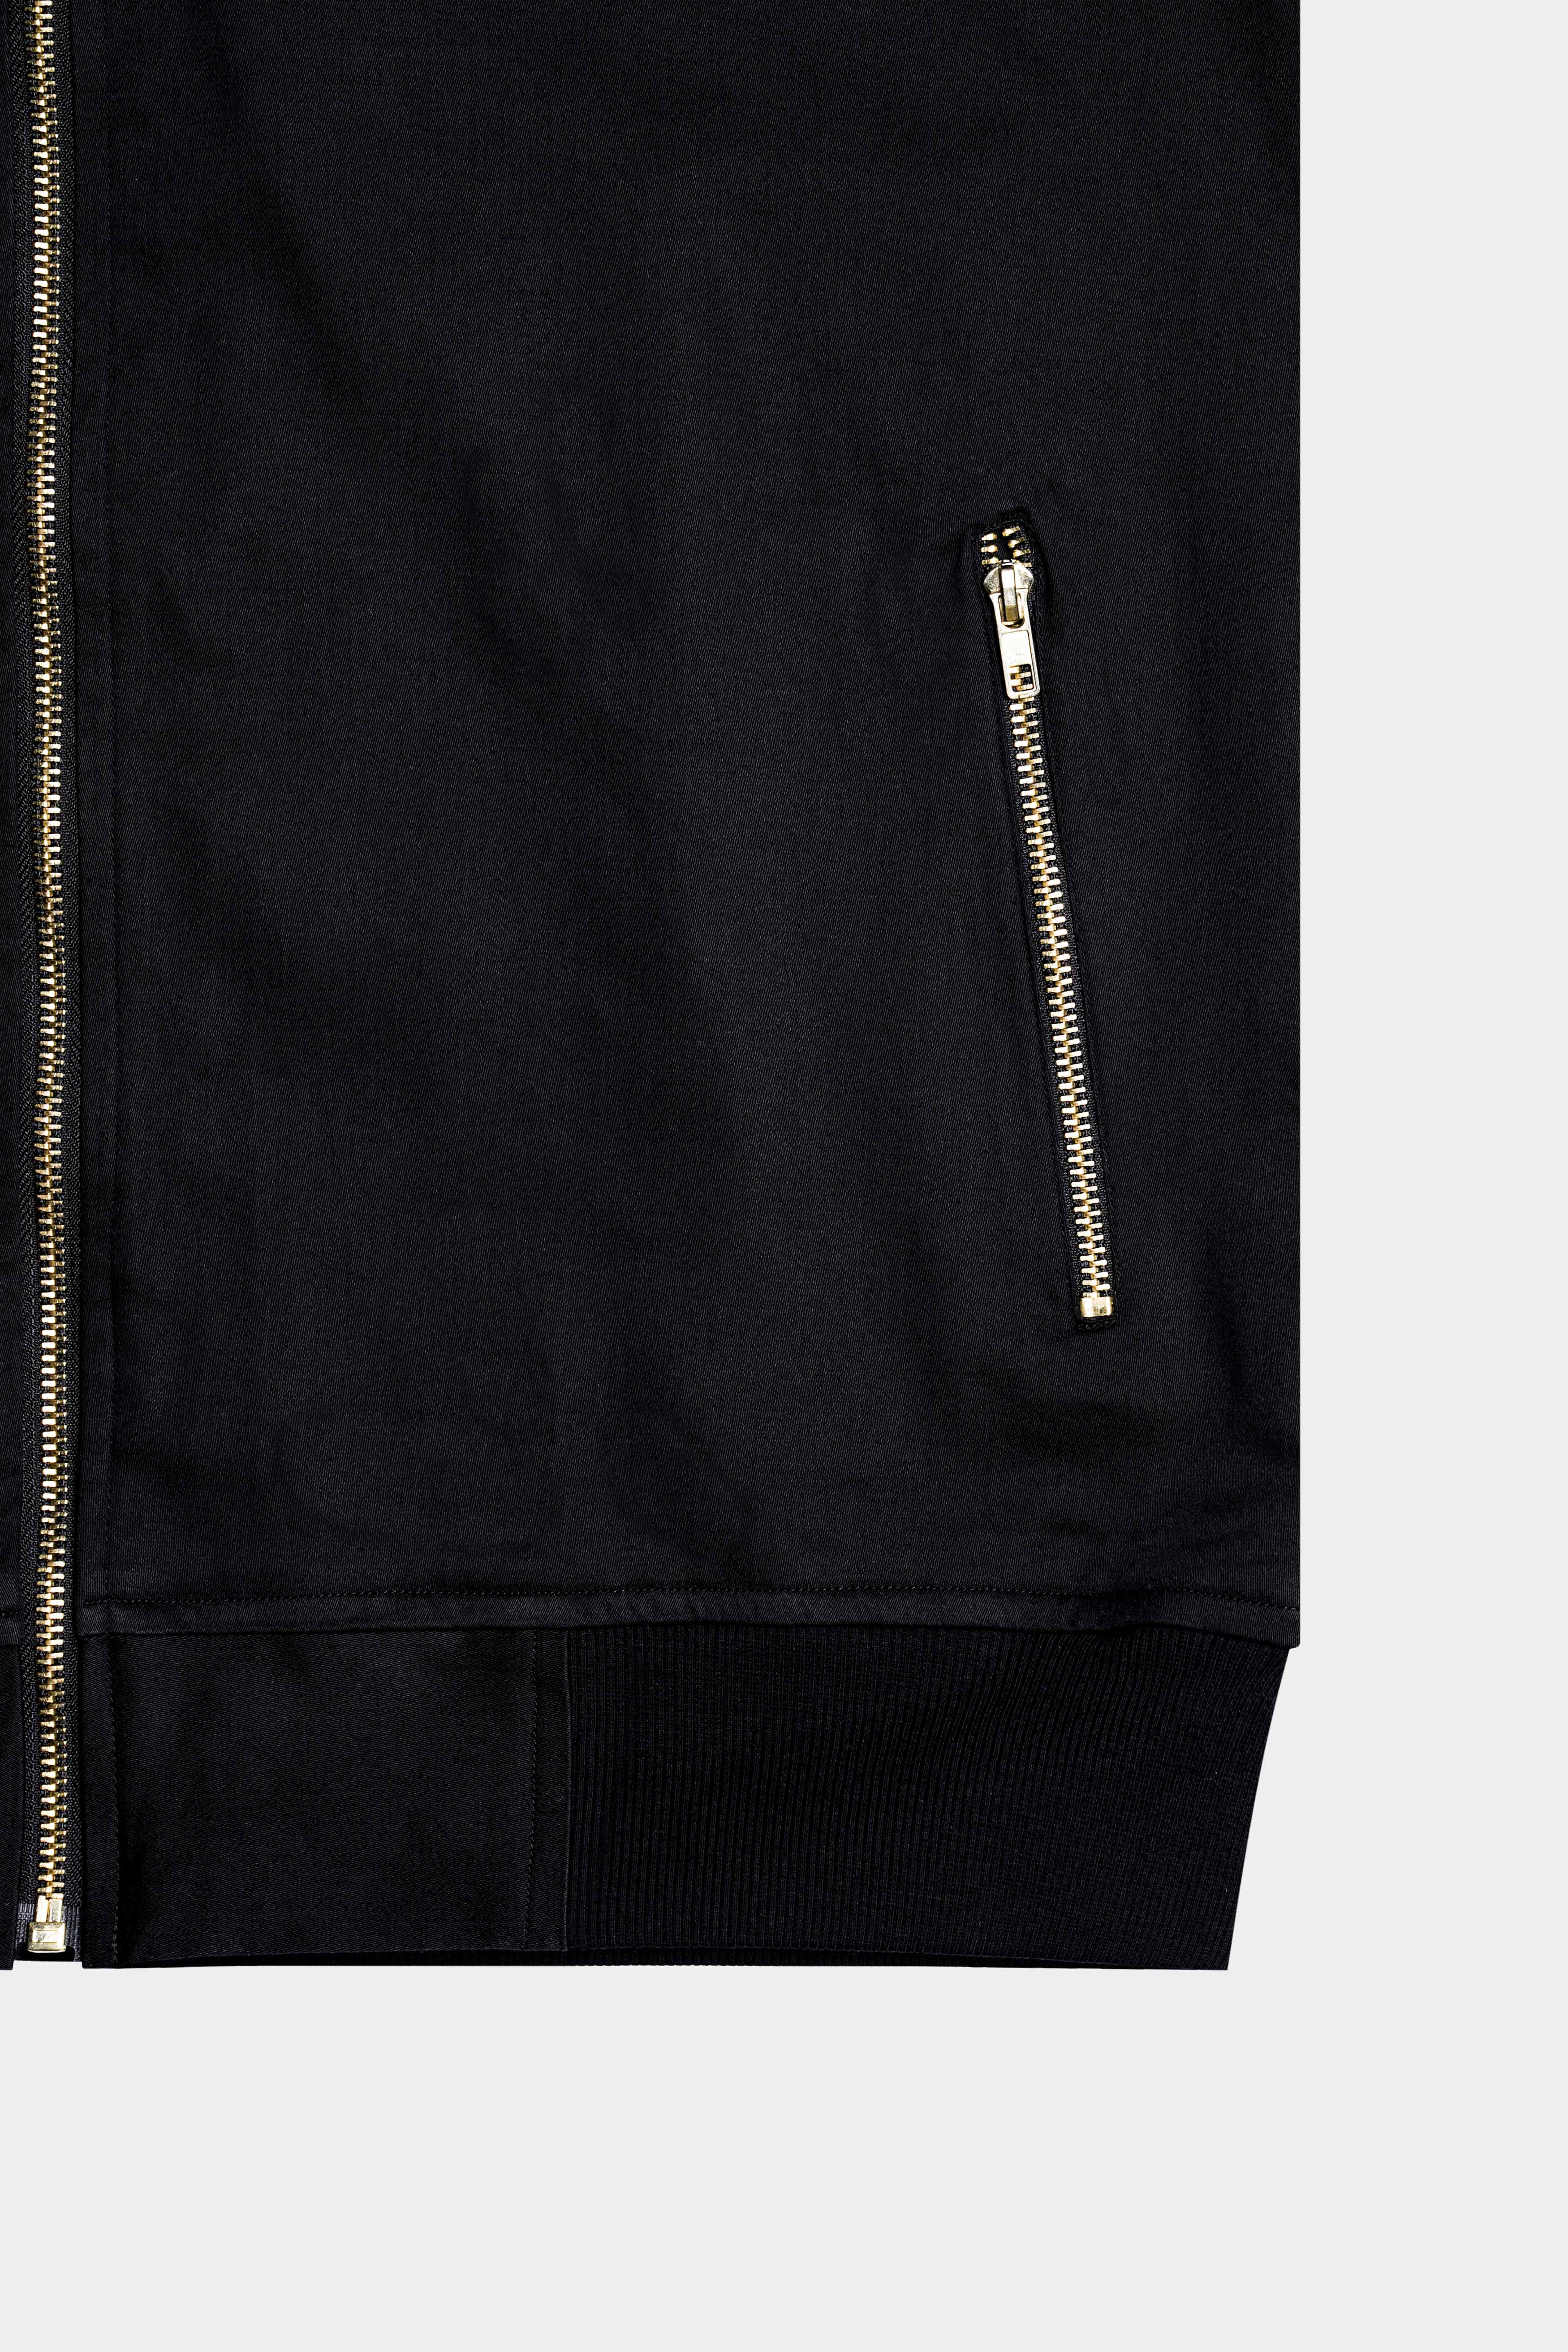 Jade Black Premium Cotton Bomber Jacket